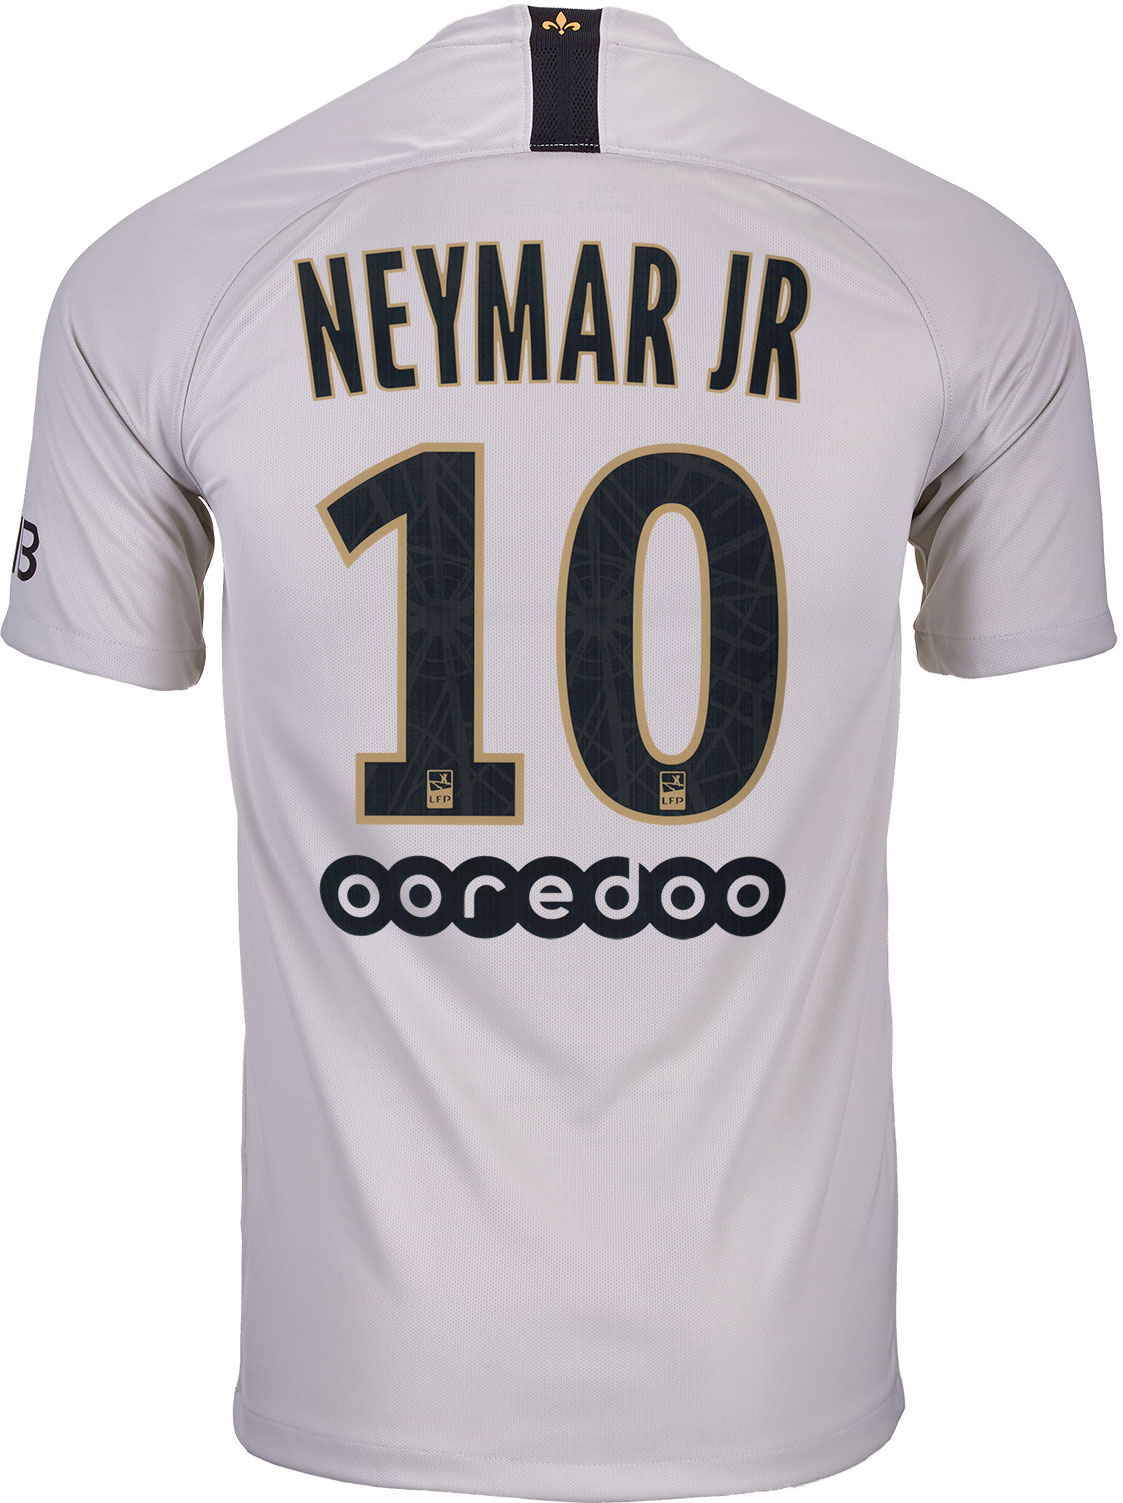 neymar away jersey